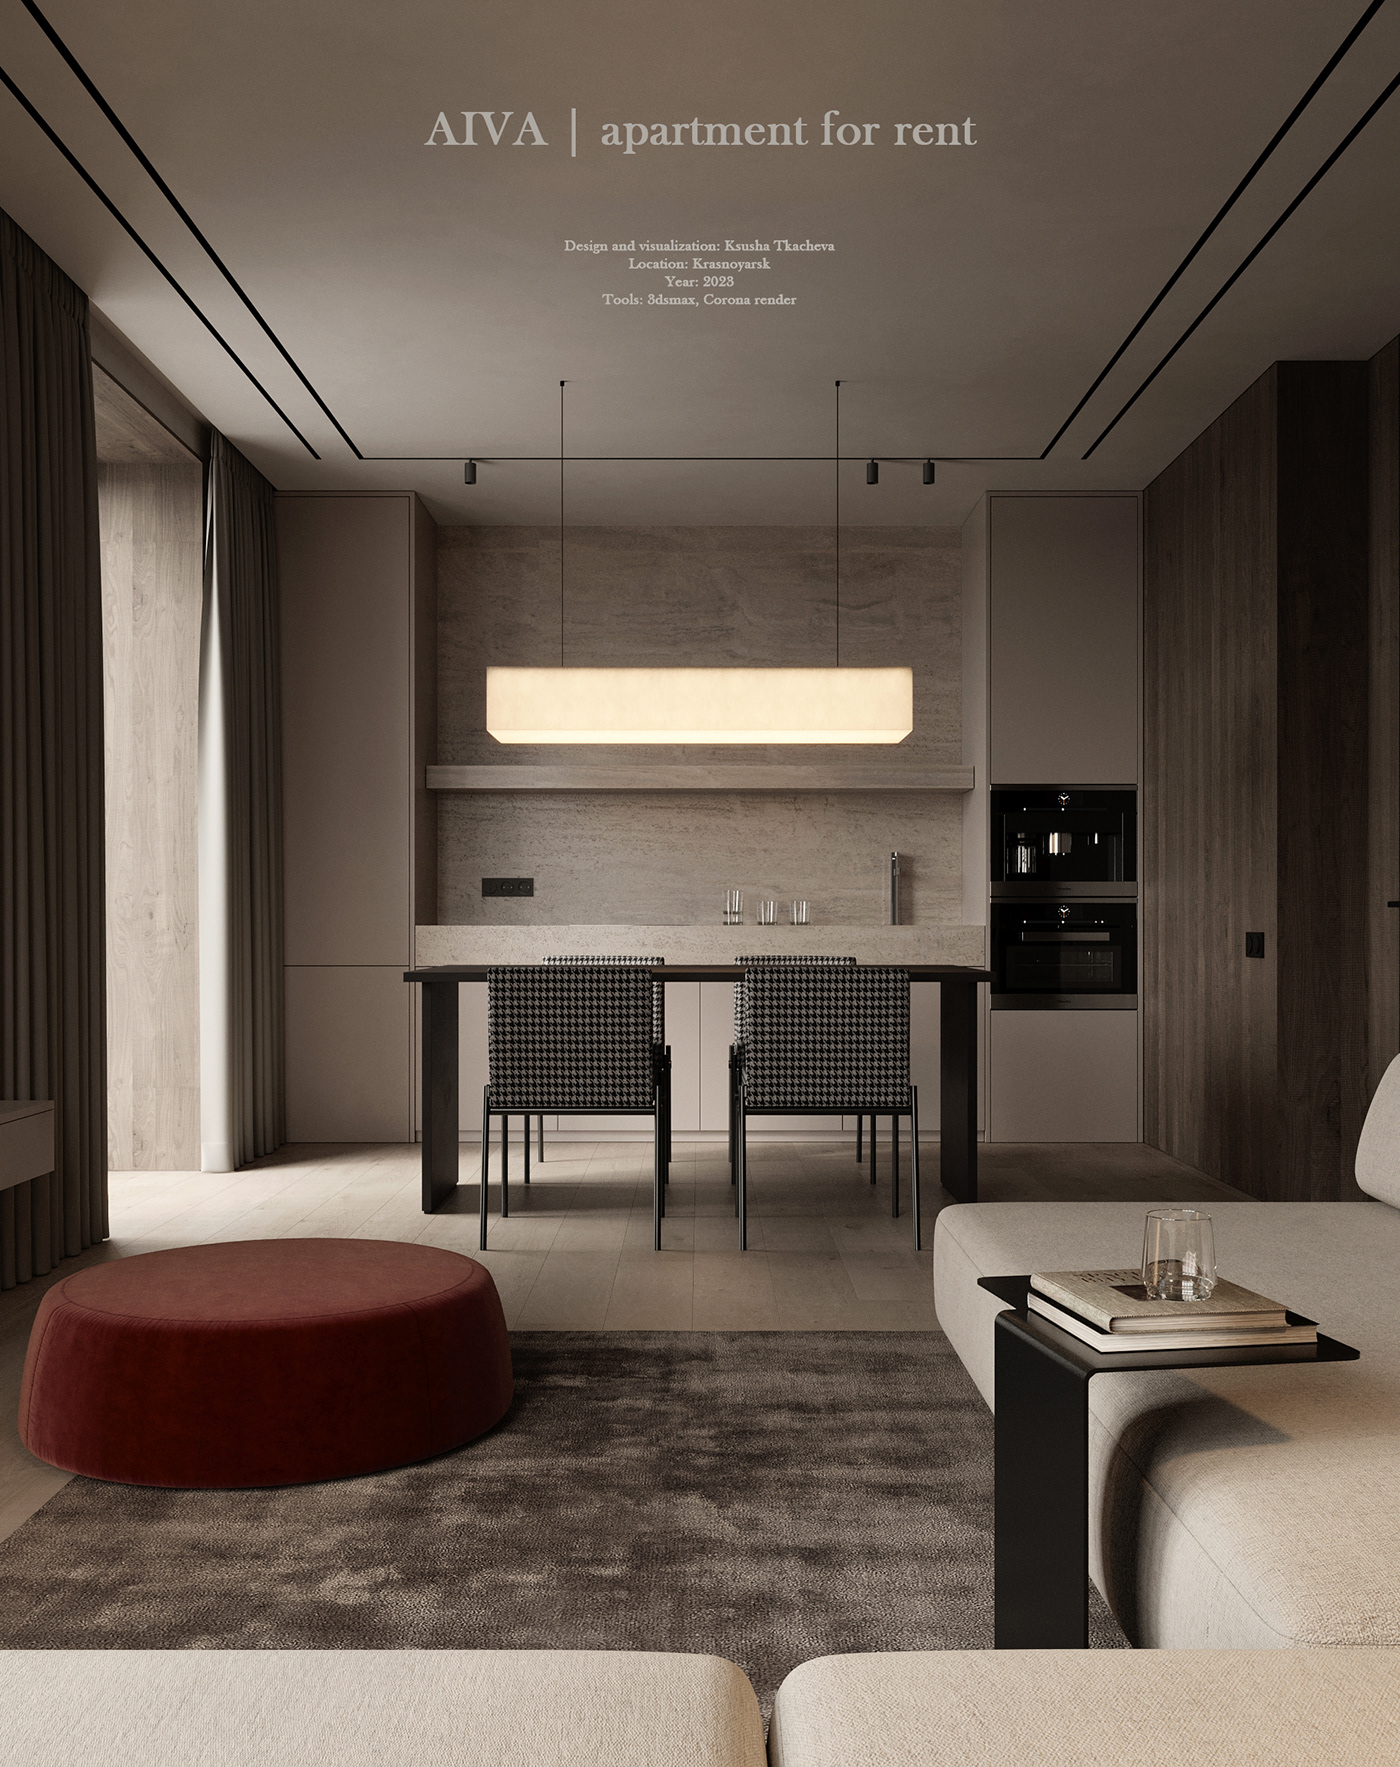 design interiordesign Interior livingroom cozy bedroom bathroom visualization 3ds max archviz